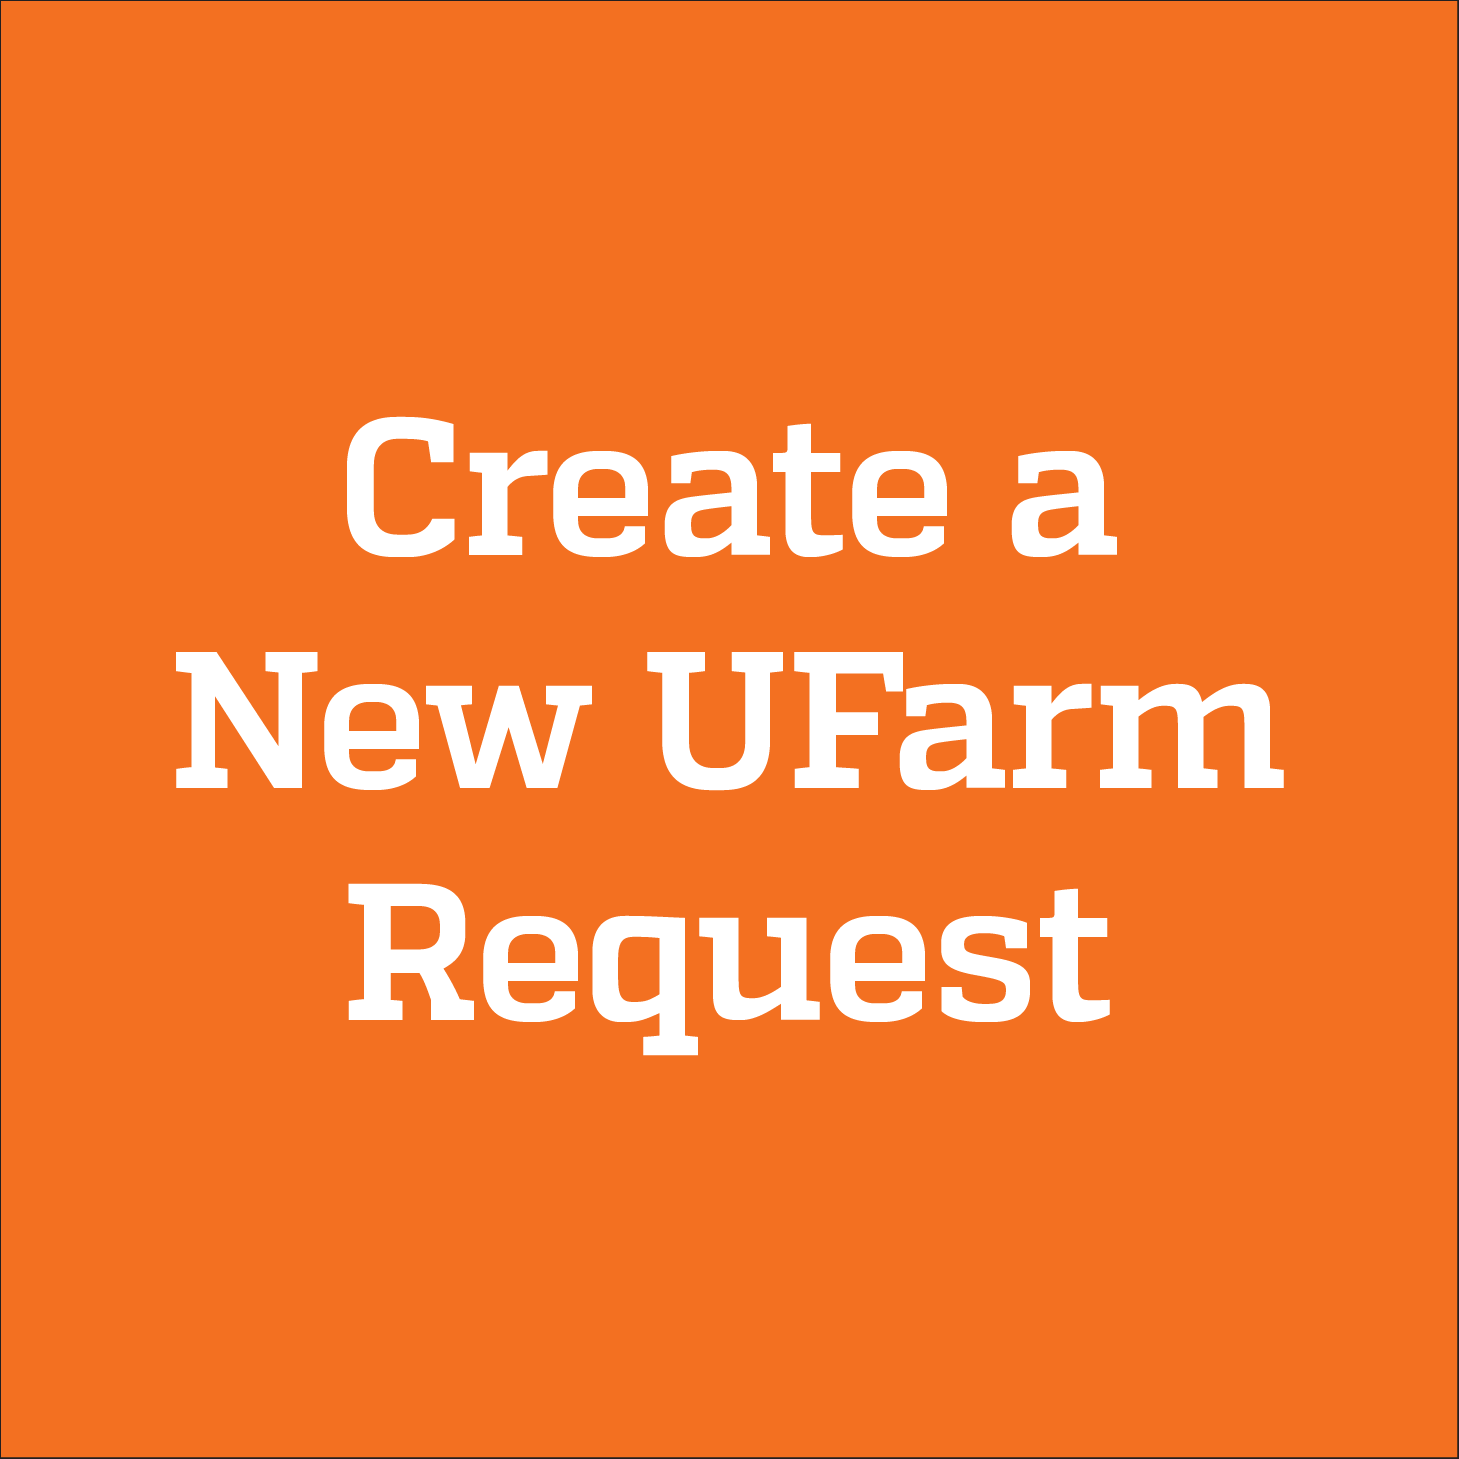 Create a New UFarm Request